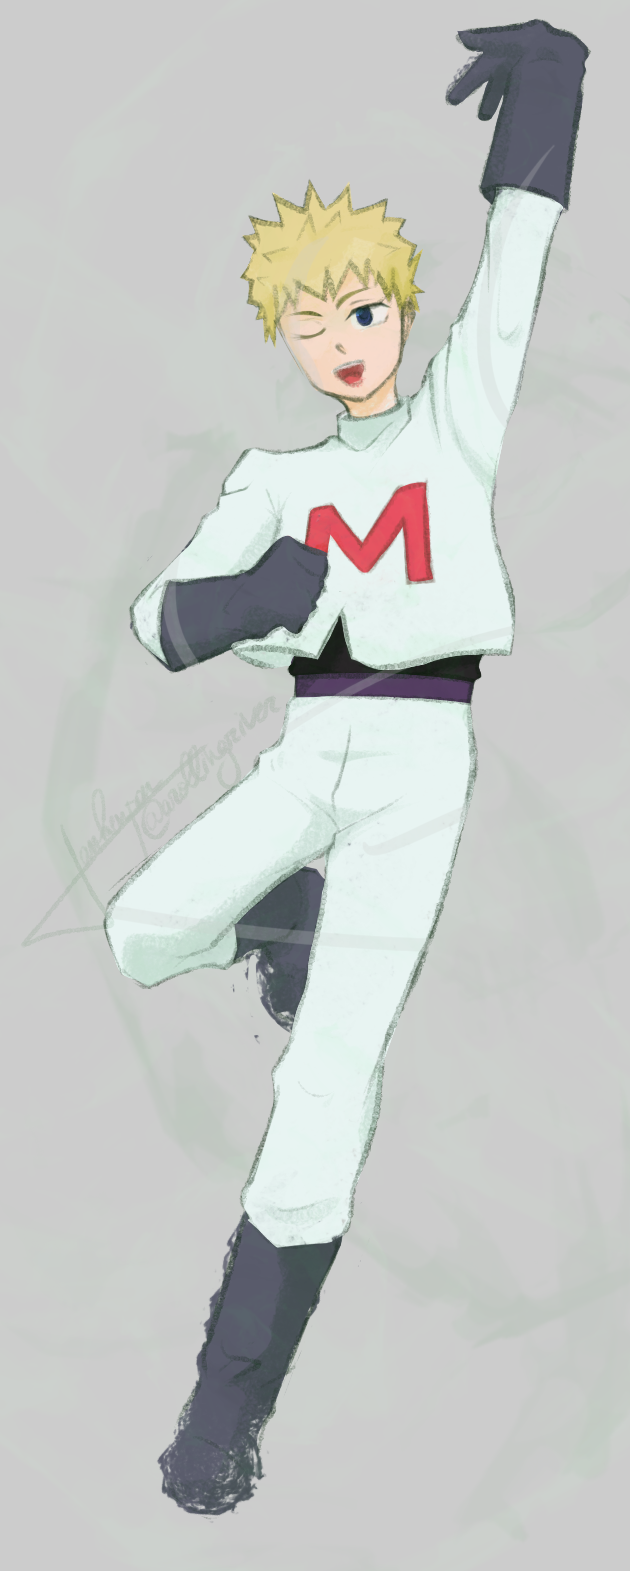 A digital sketch of Teruki Hanazawa wearing a Team Rocket outfit and striking James' pose 